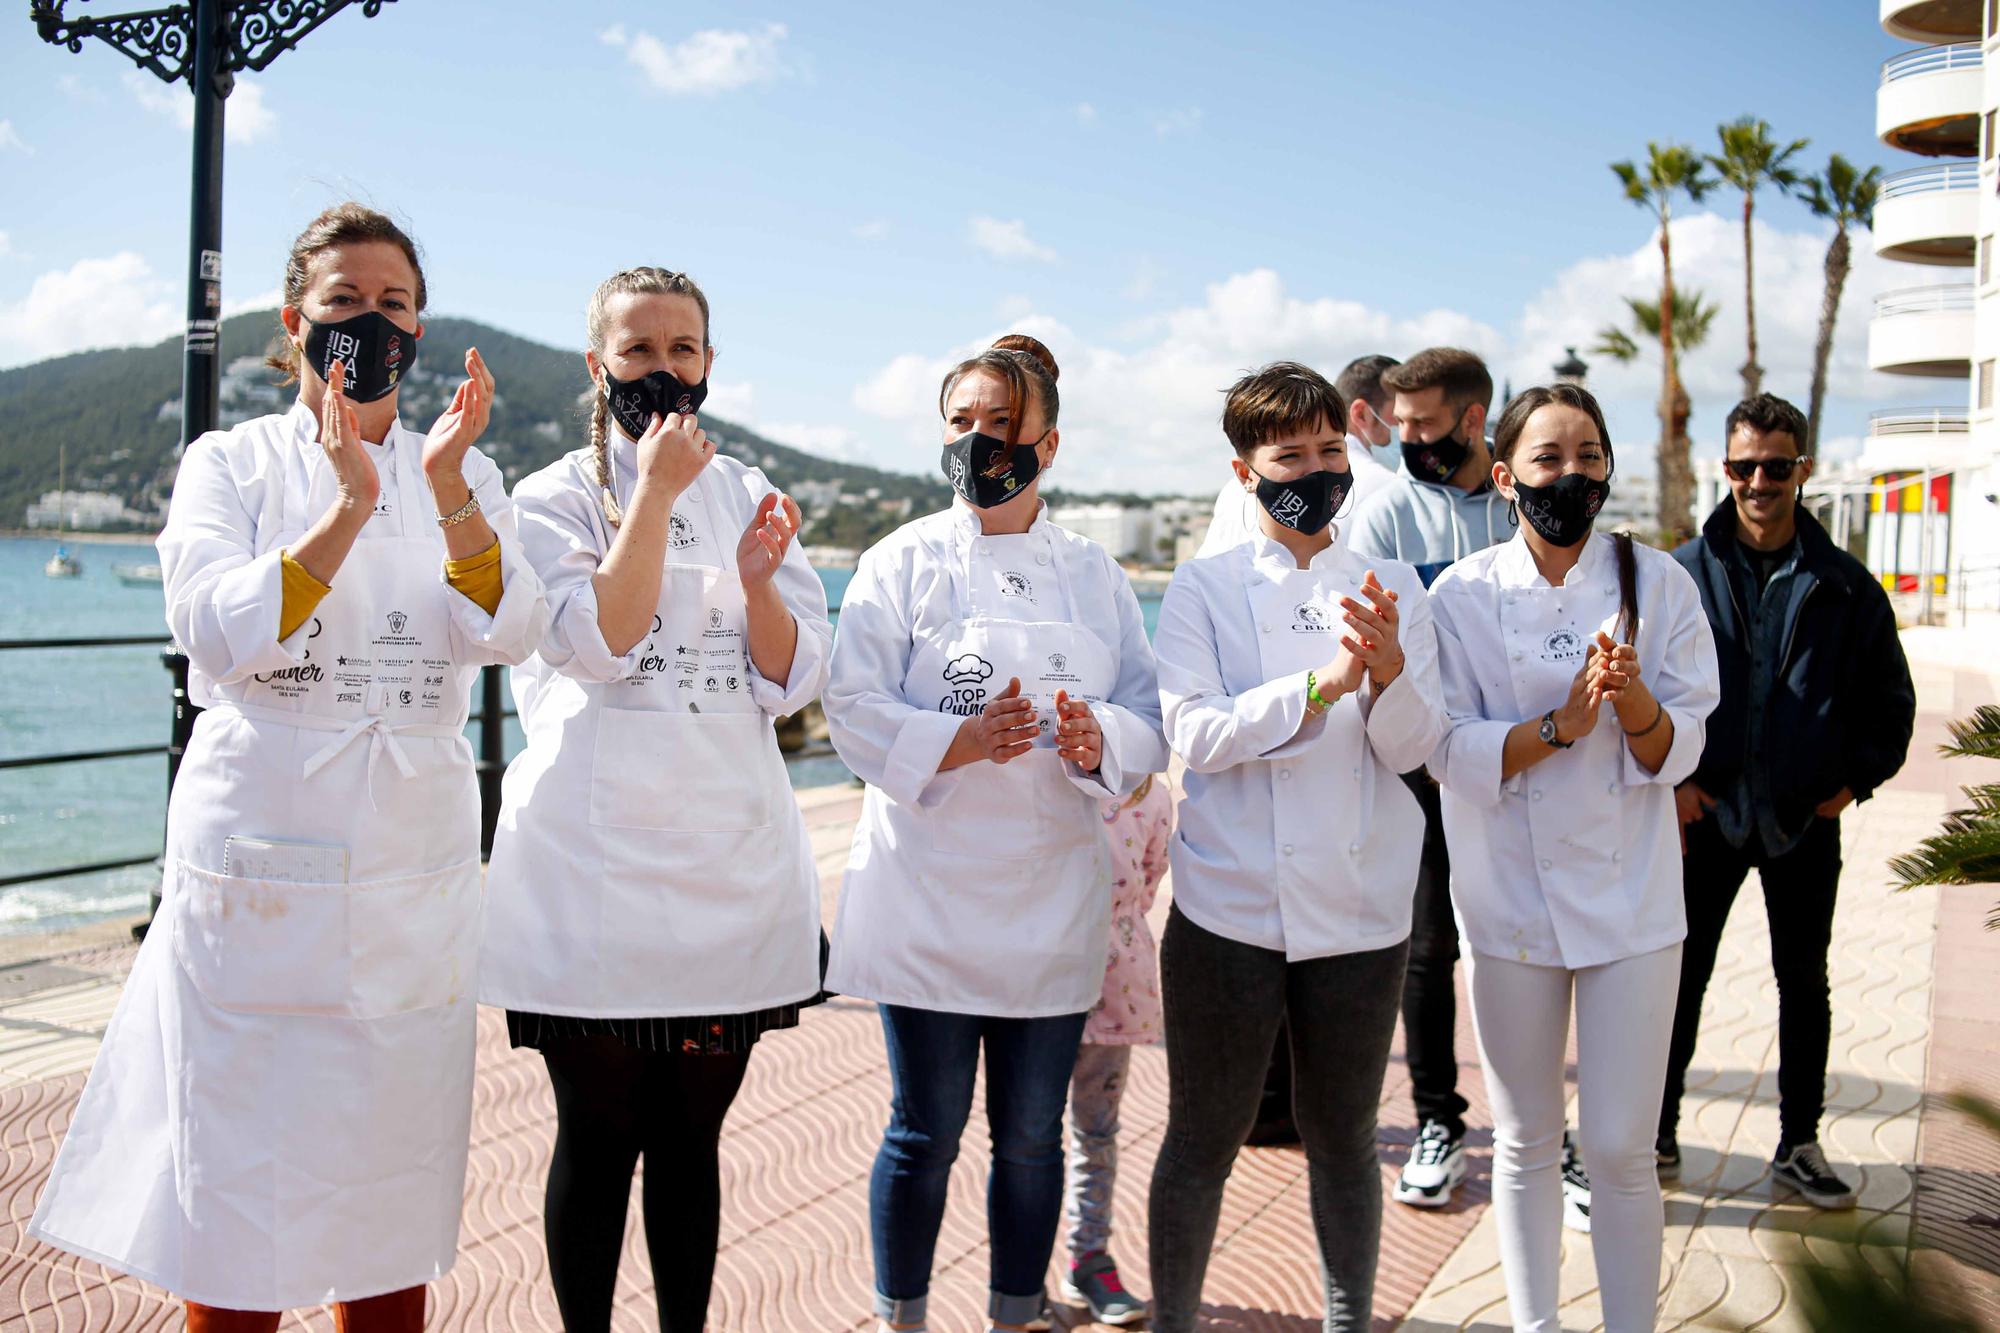 Top Cuiner: Concurso de cocina en Santa Eulària